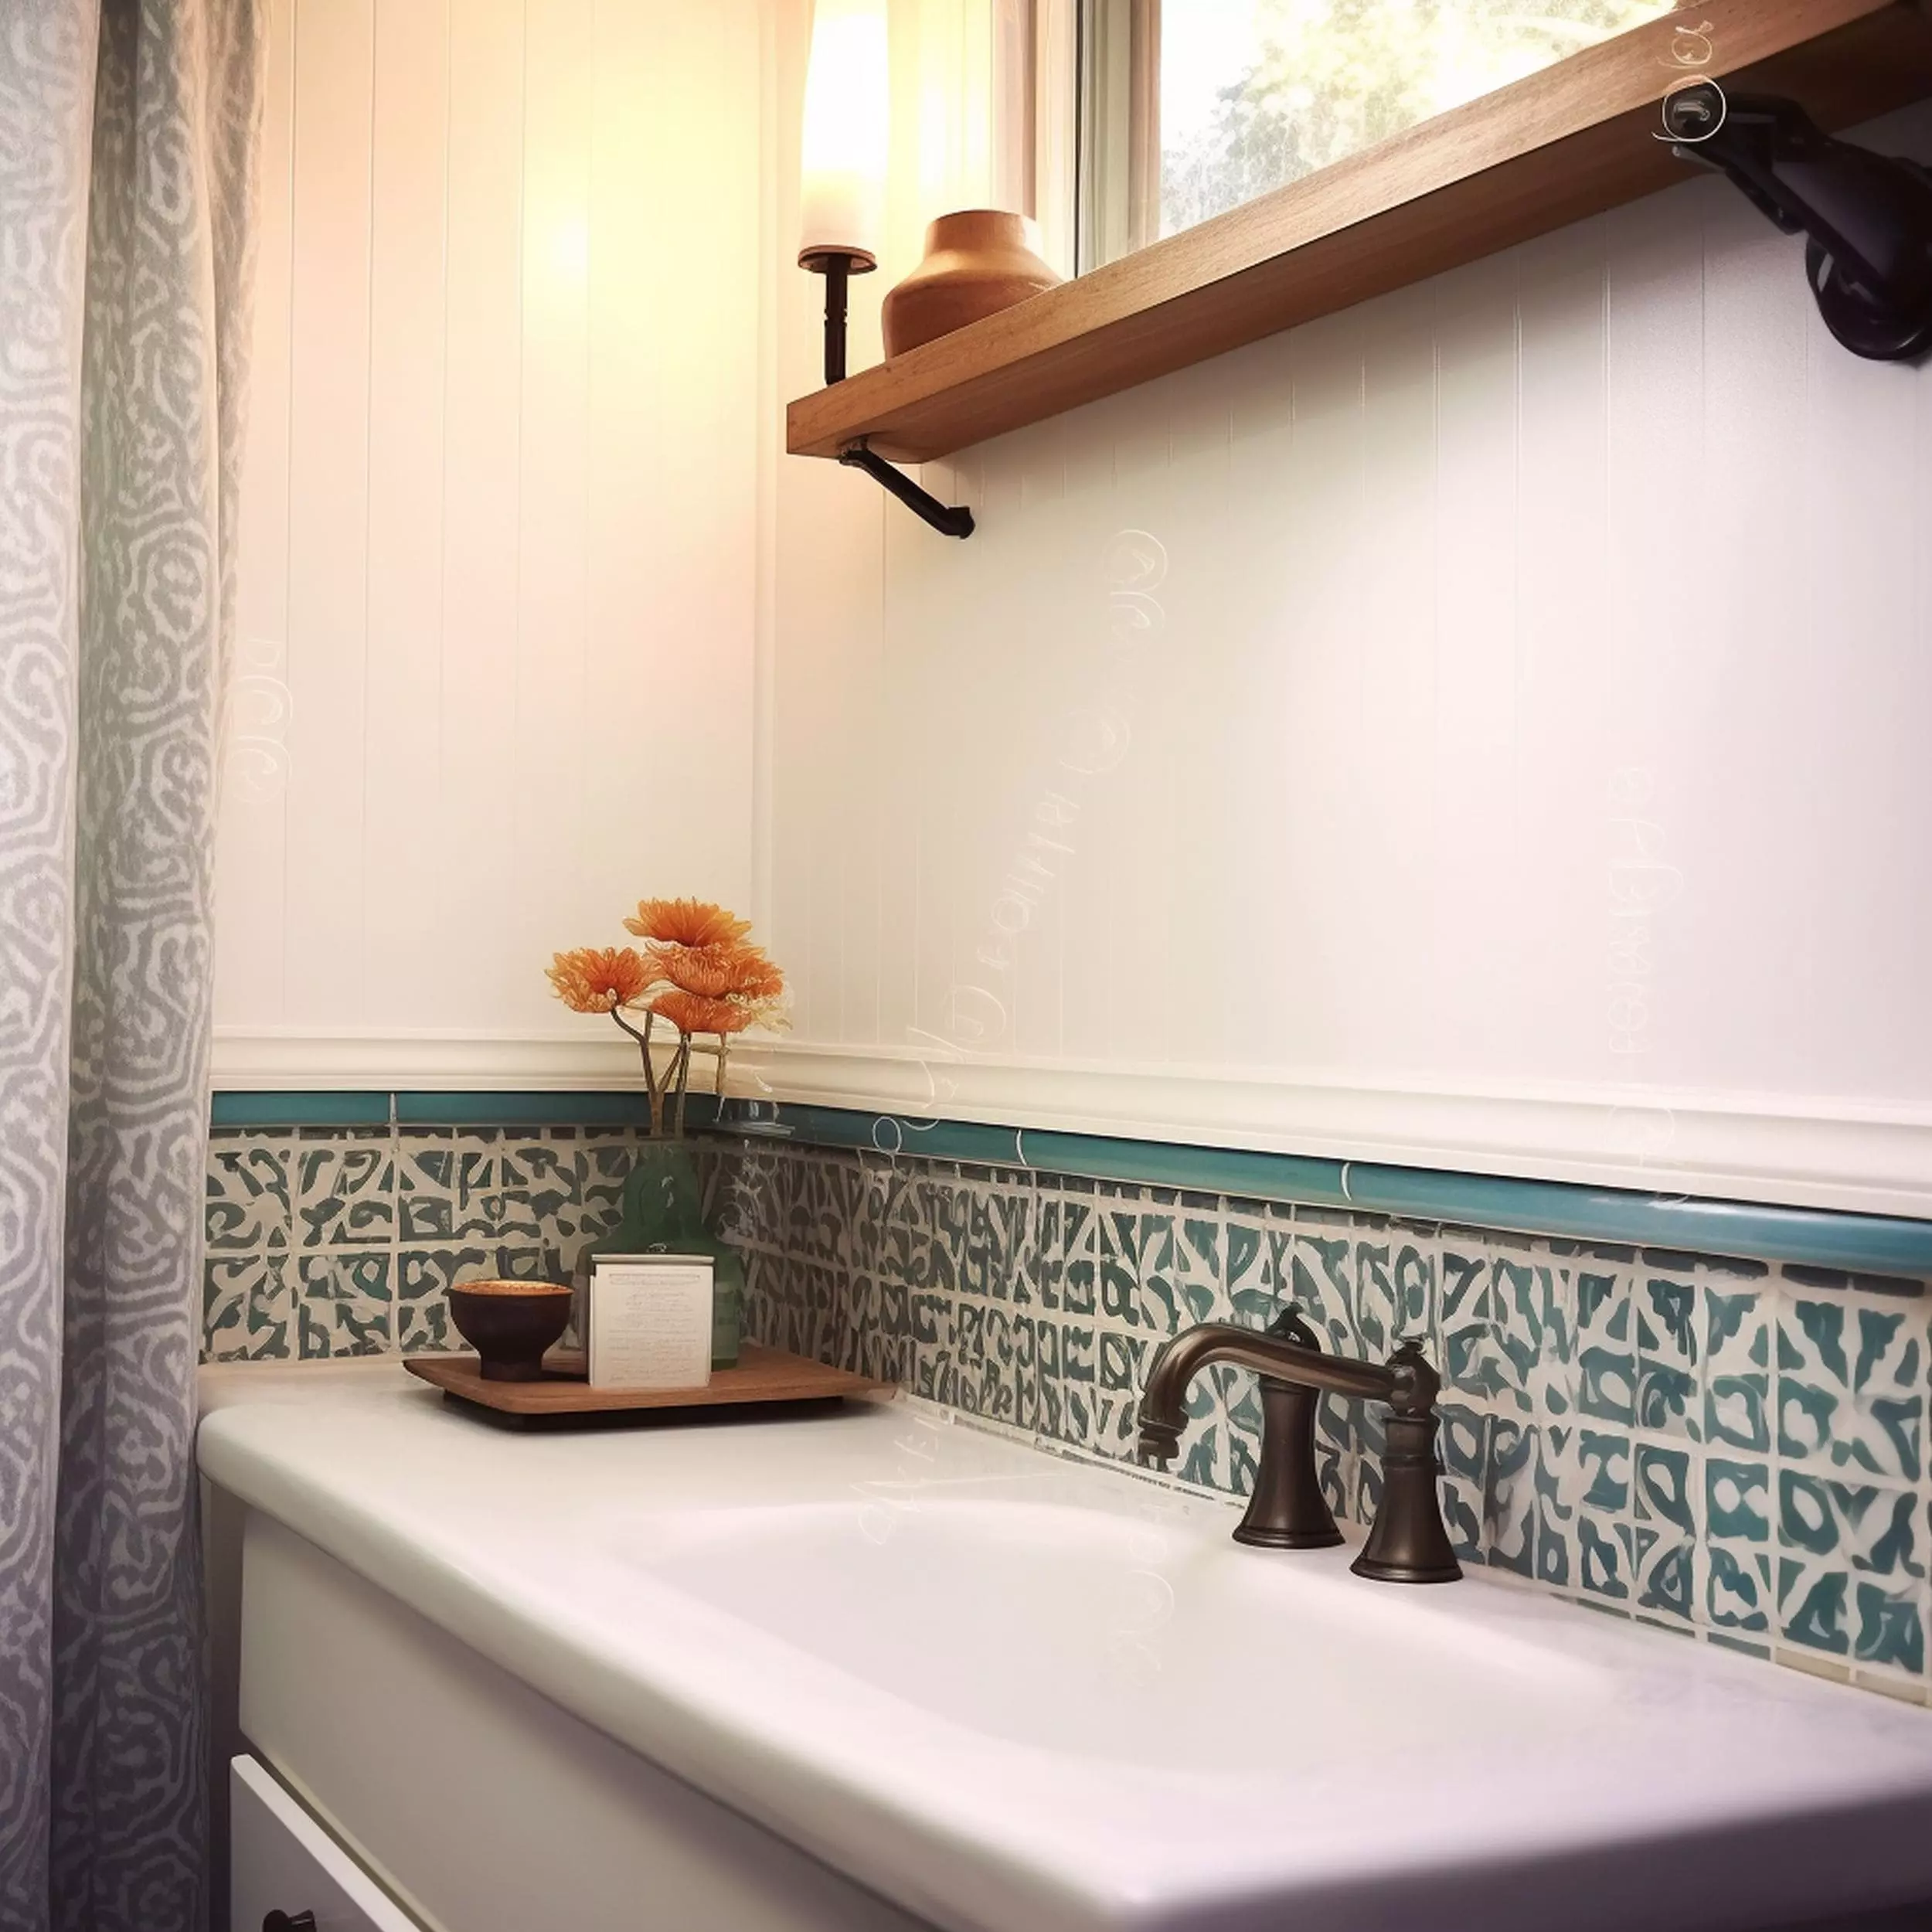 Patterned Tile Design in Compact Bathroom